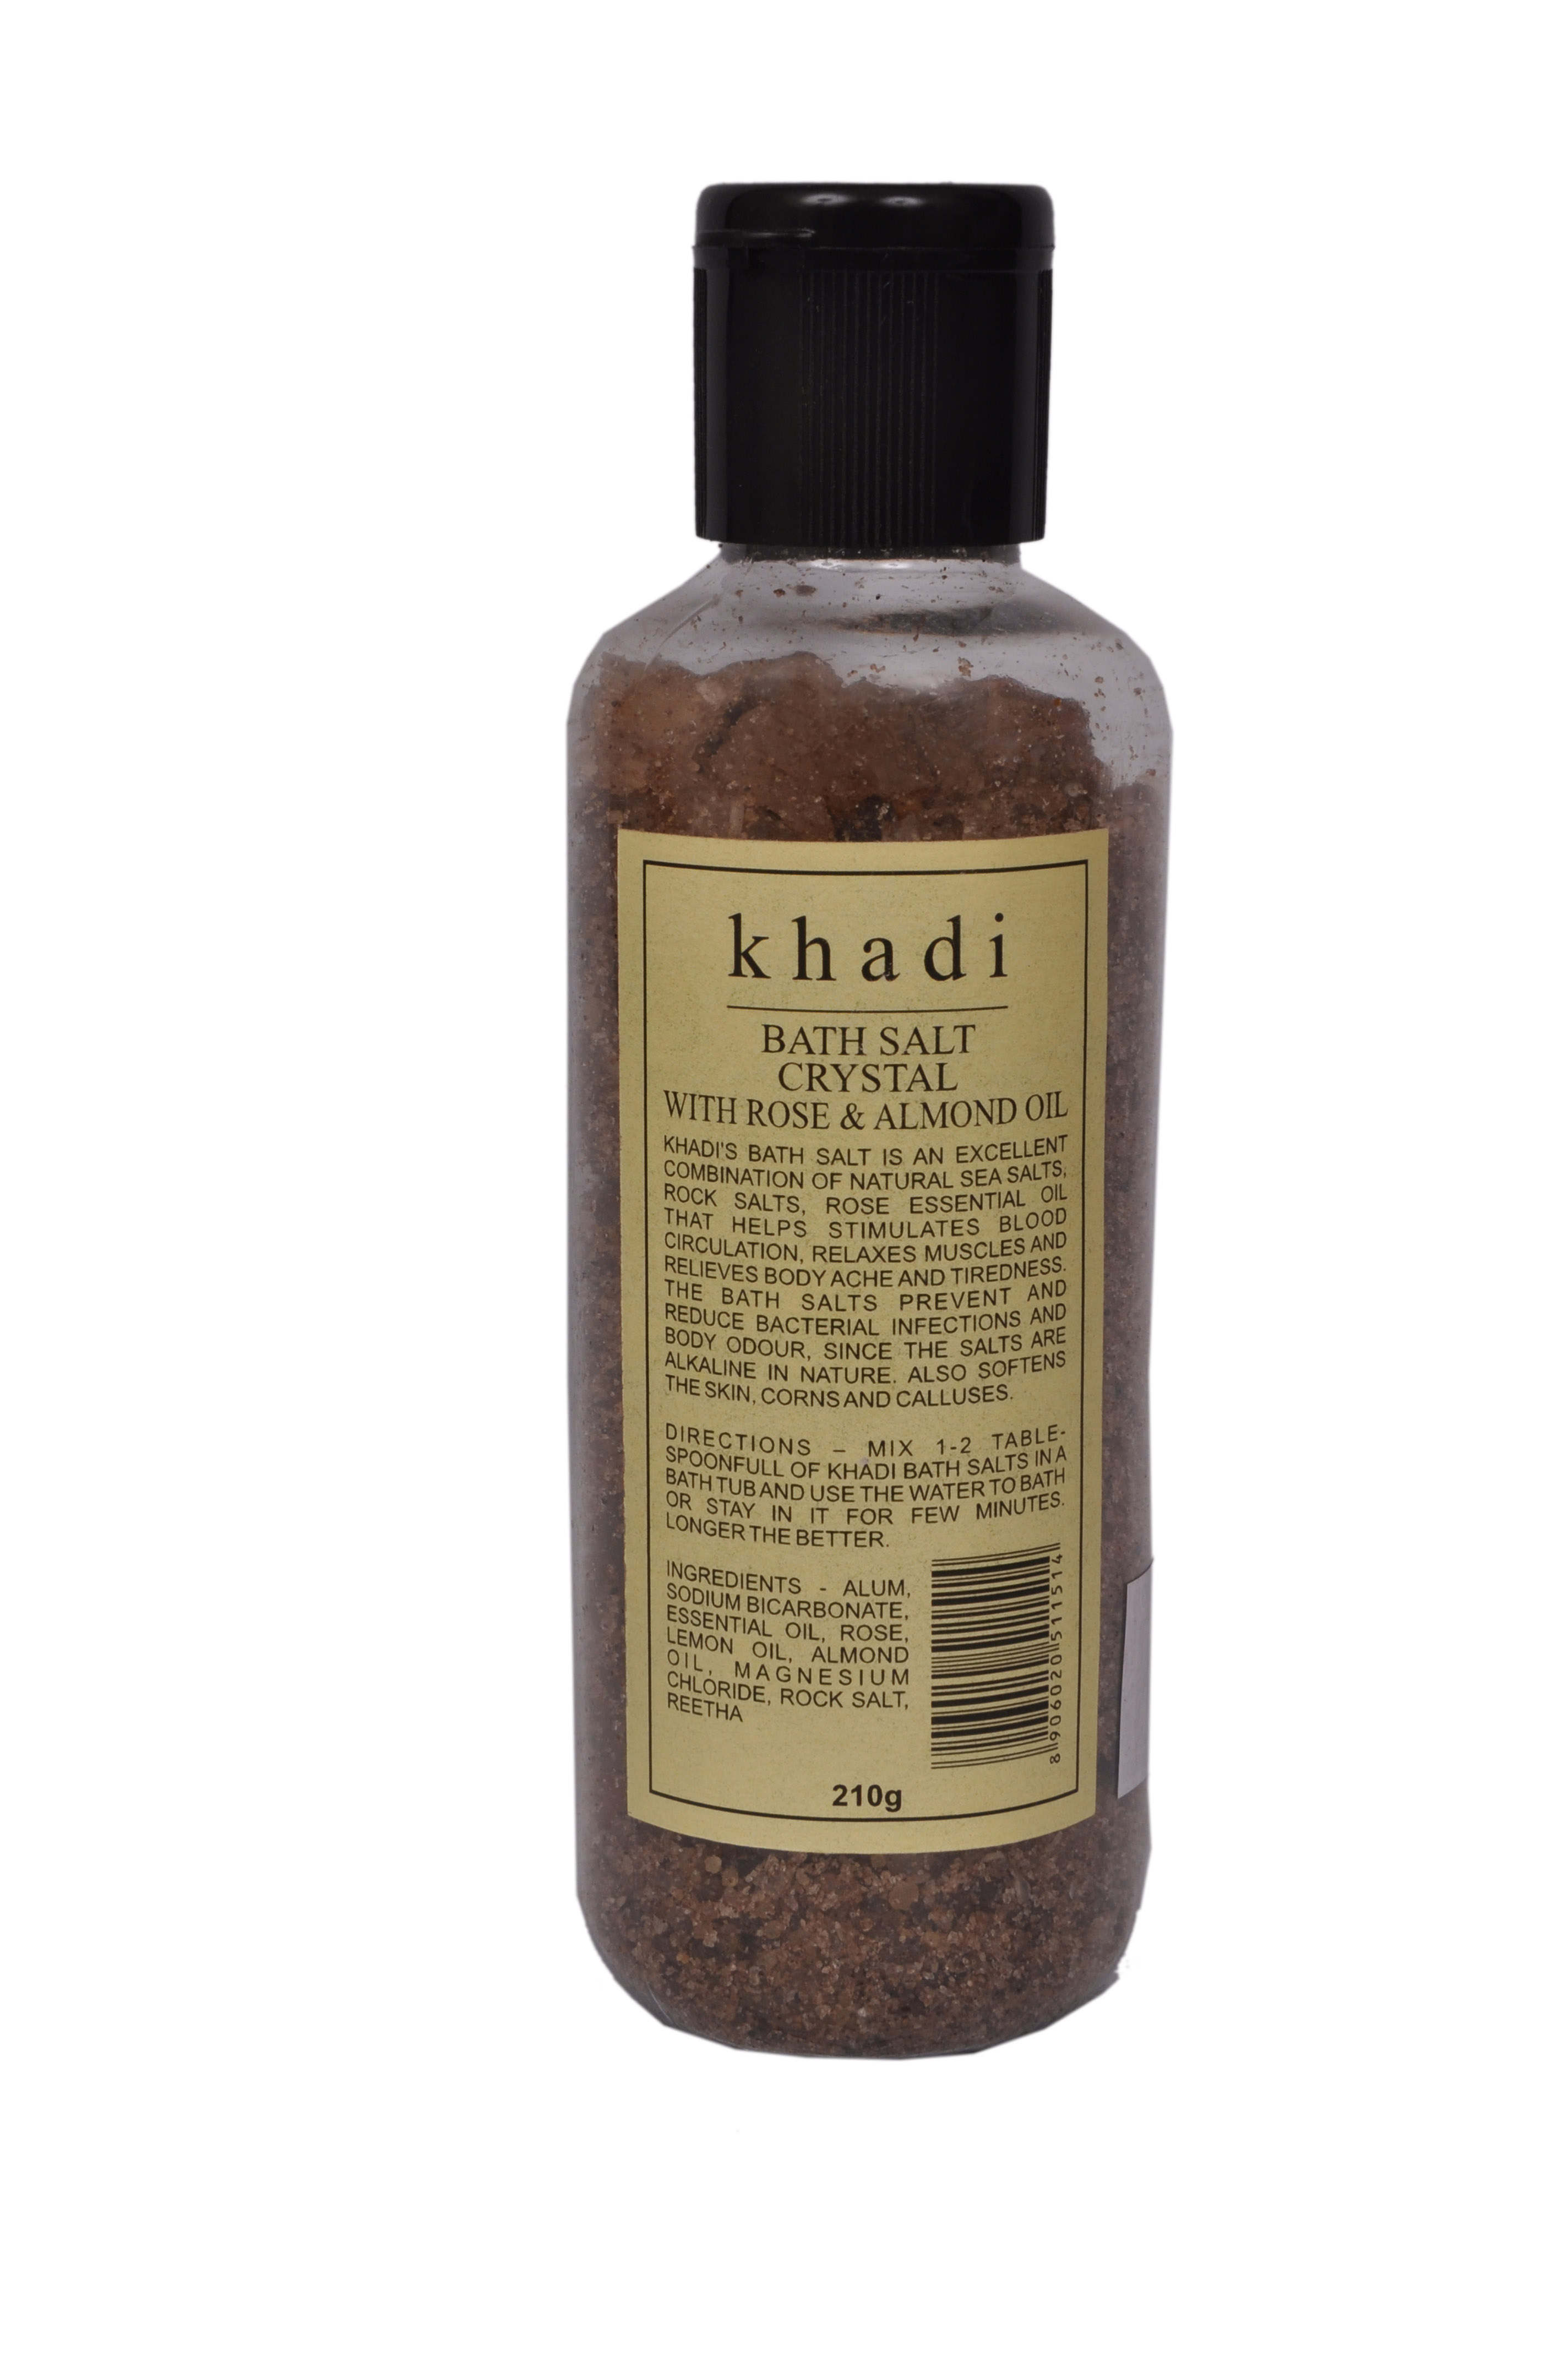 Khadi Bath Salt Crystal with Rose & Almond Oil